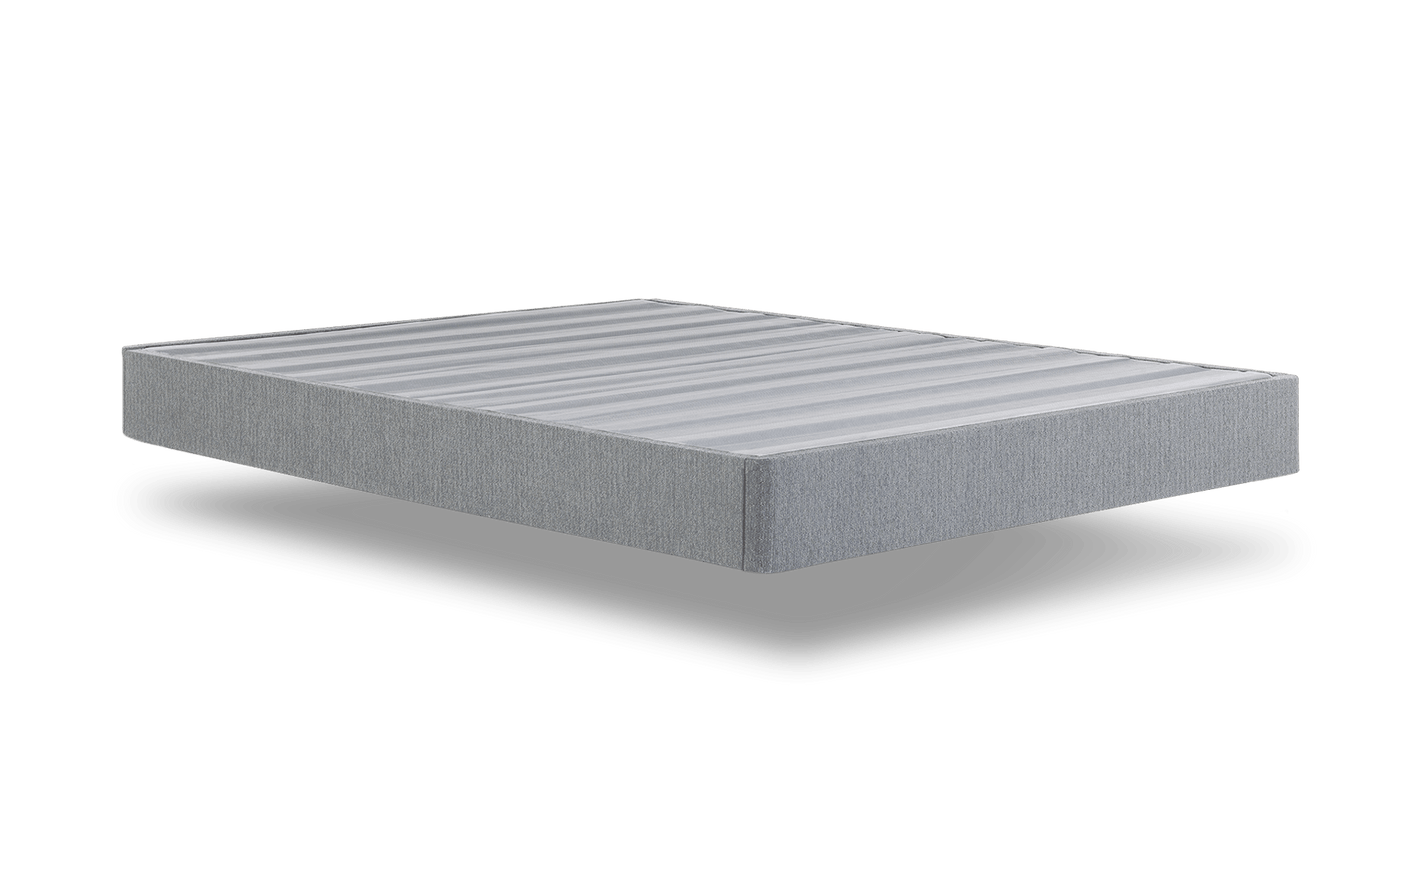 Lull mattress foundation isolated